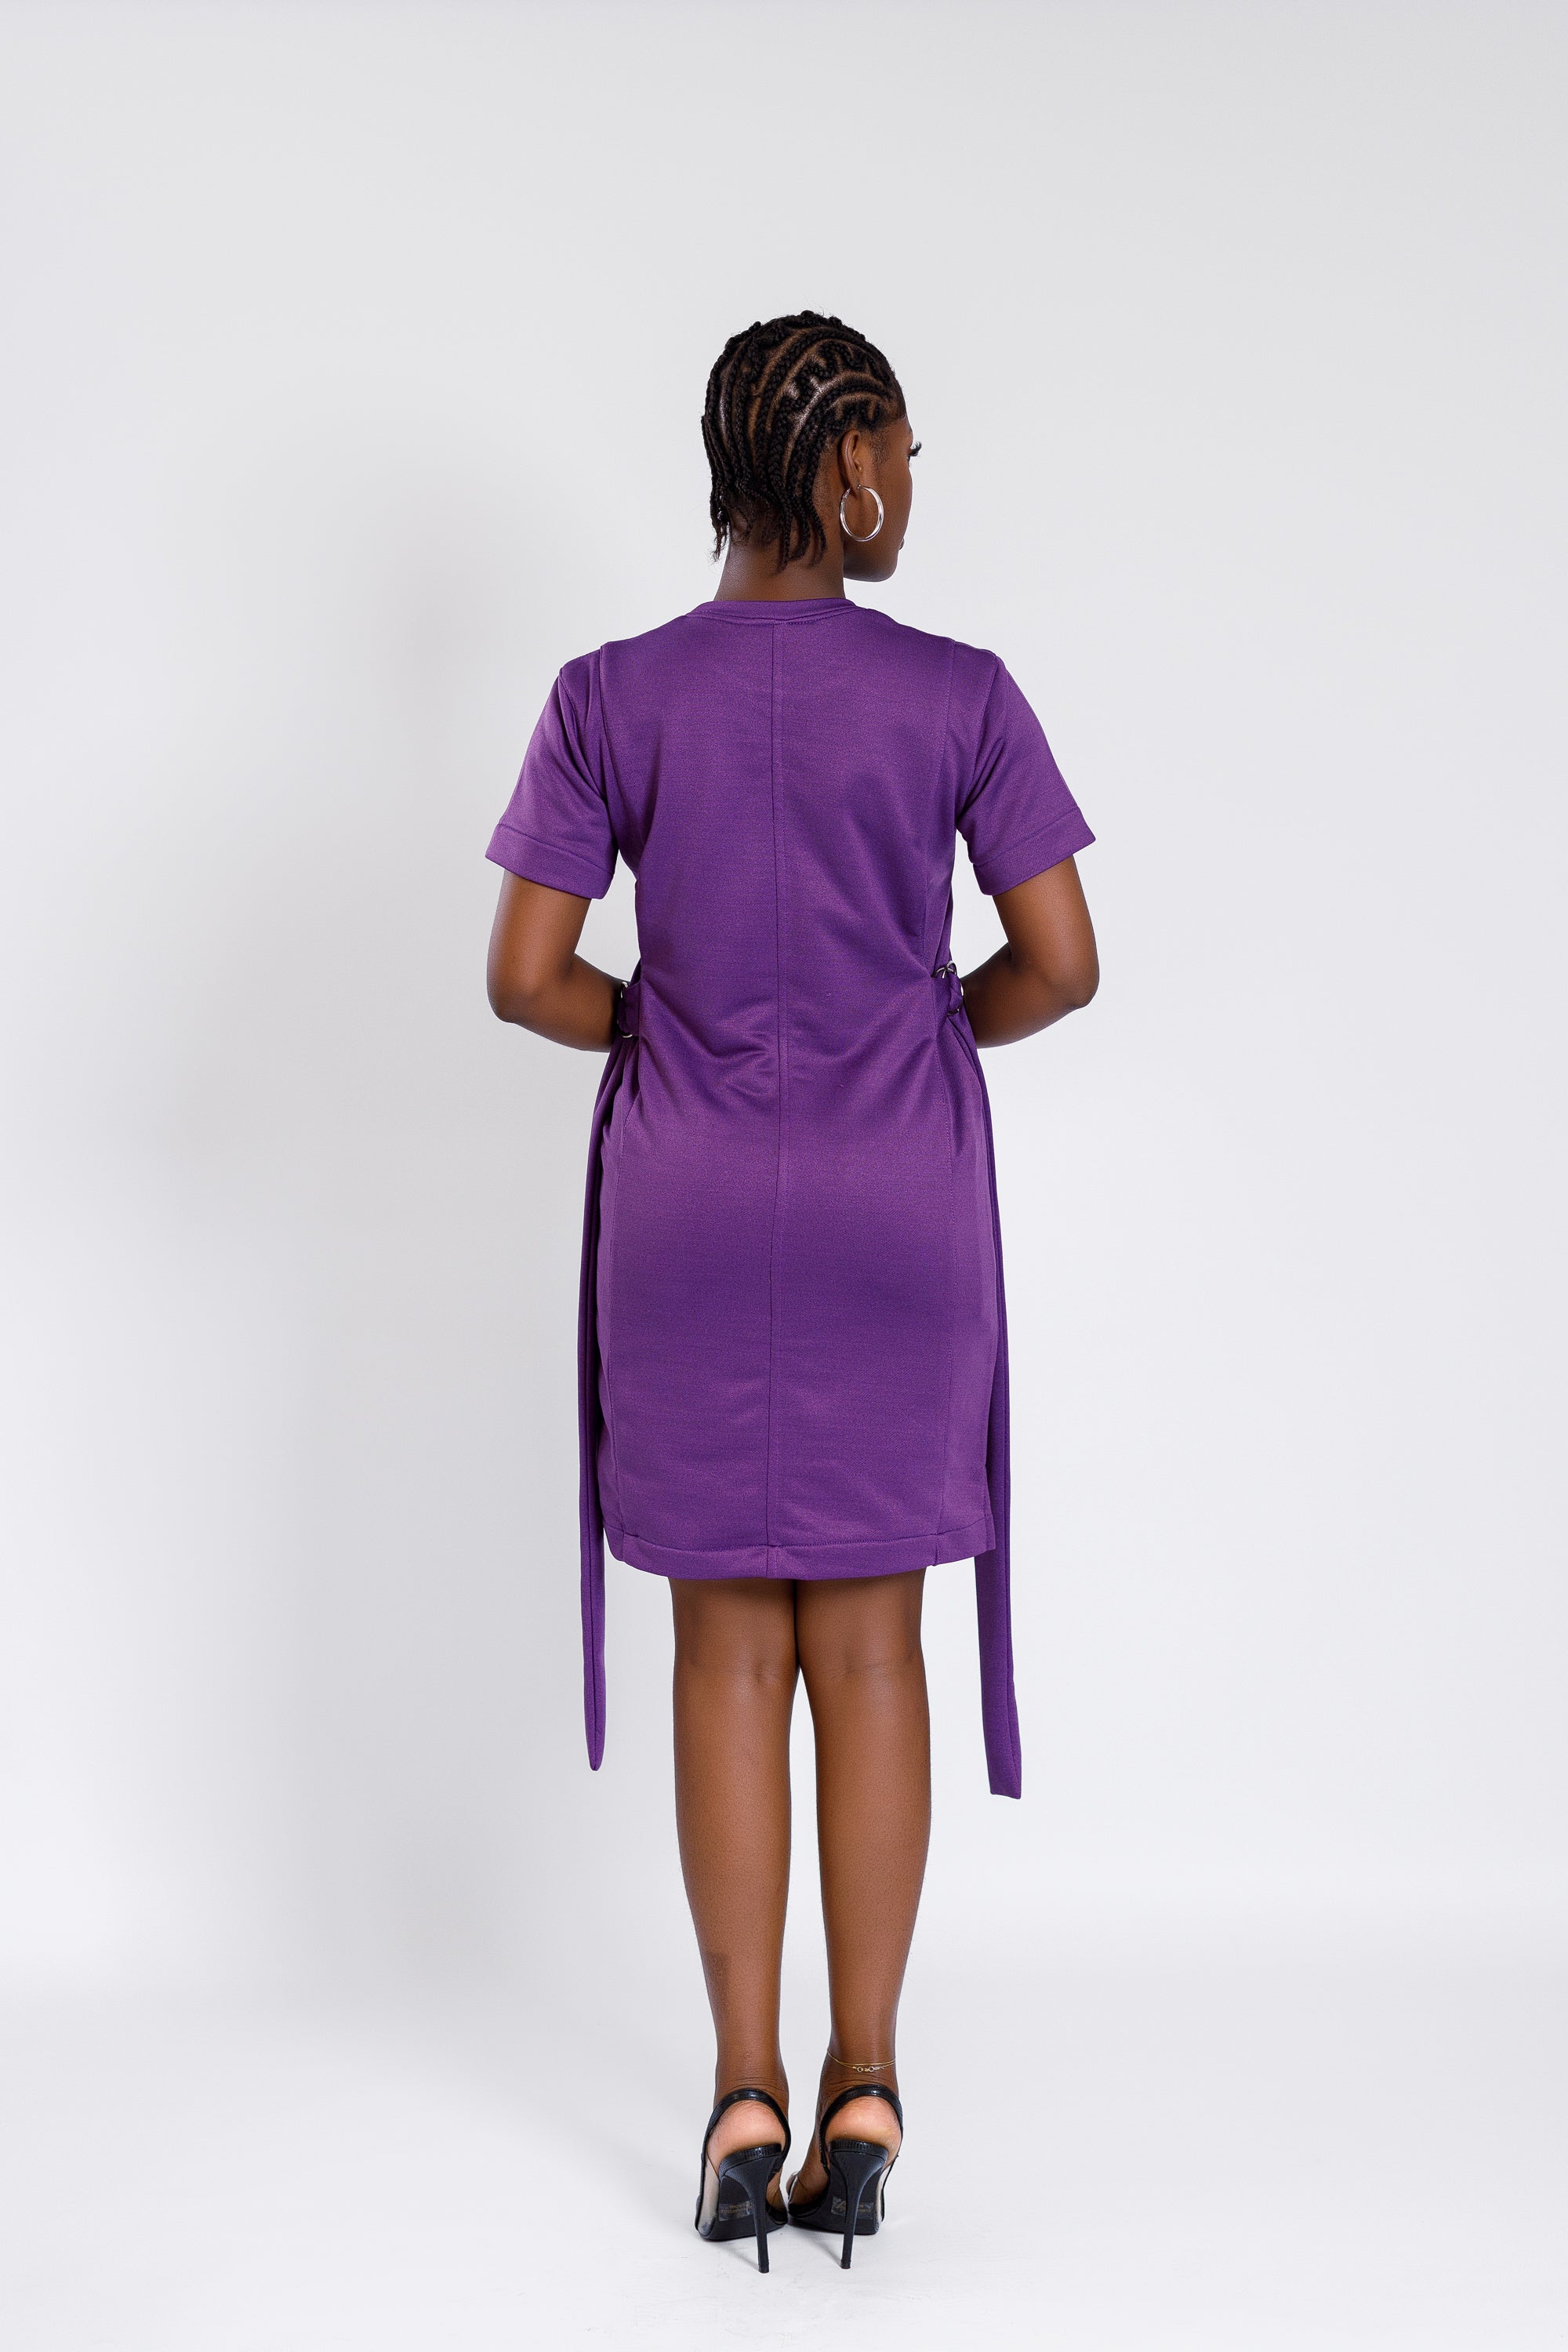 Northlove Dress 2.0 in Purple